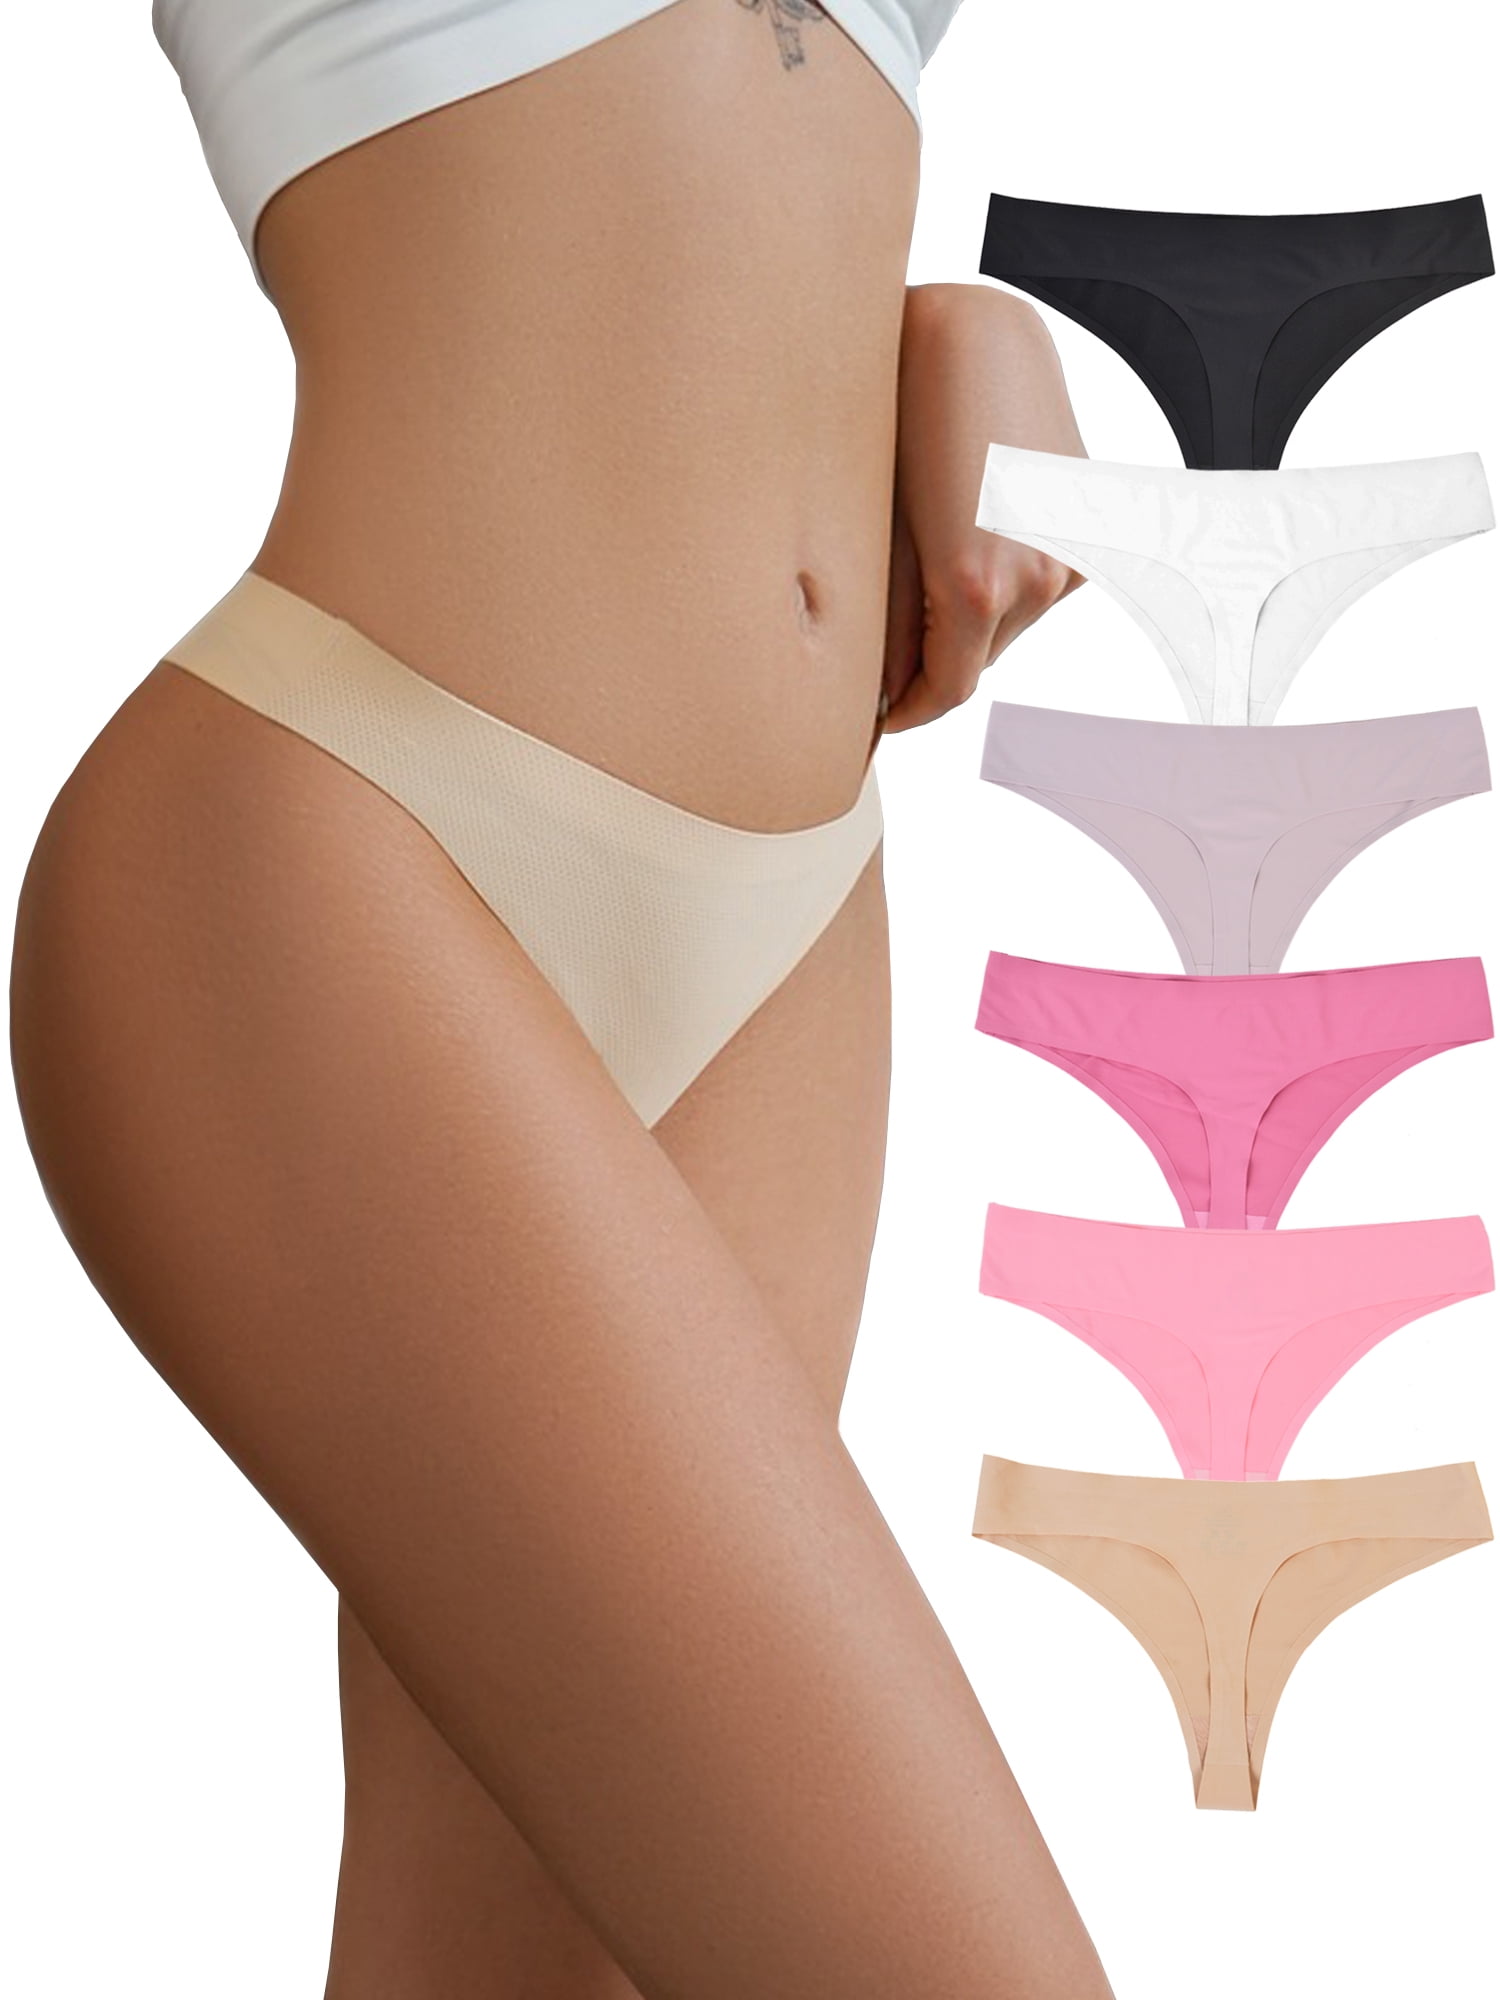 Buankoxy Women's Seamless Thongs Underwear Stretch Nylon Panties